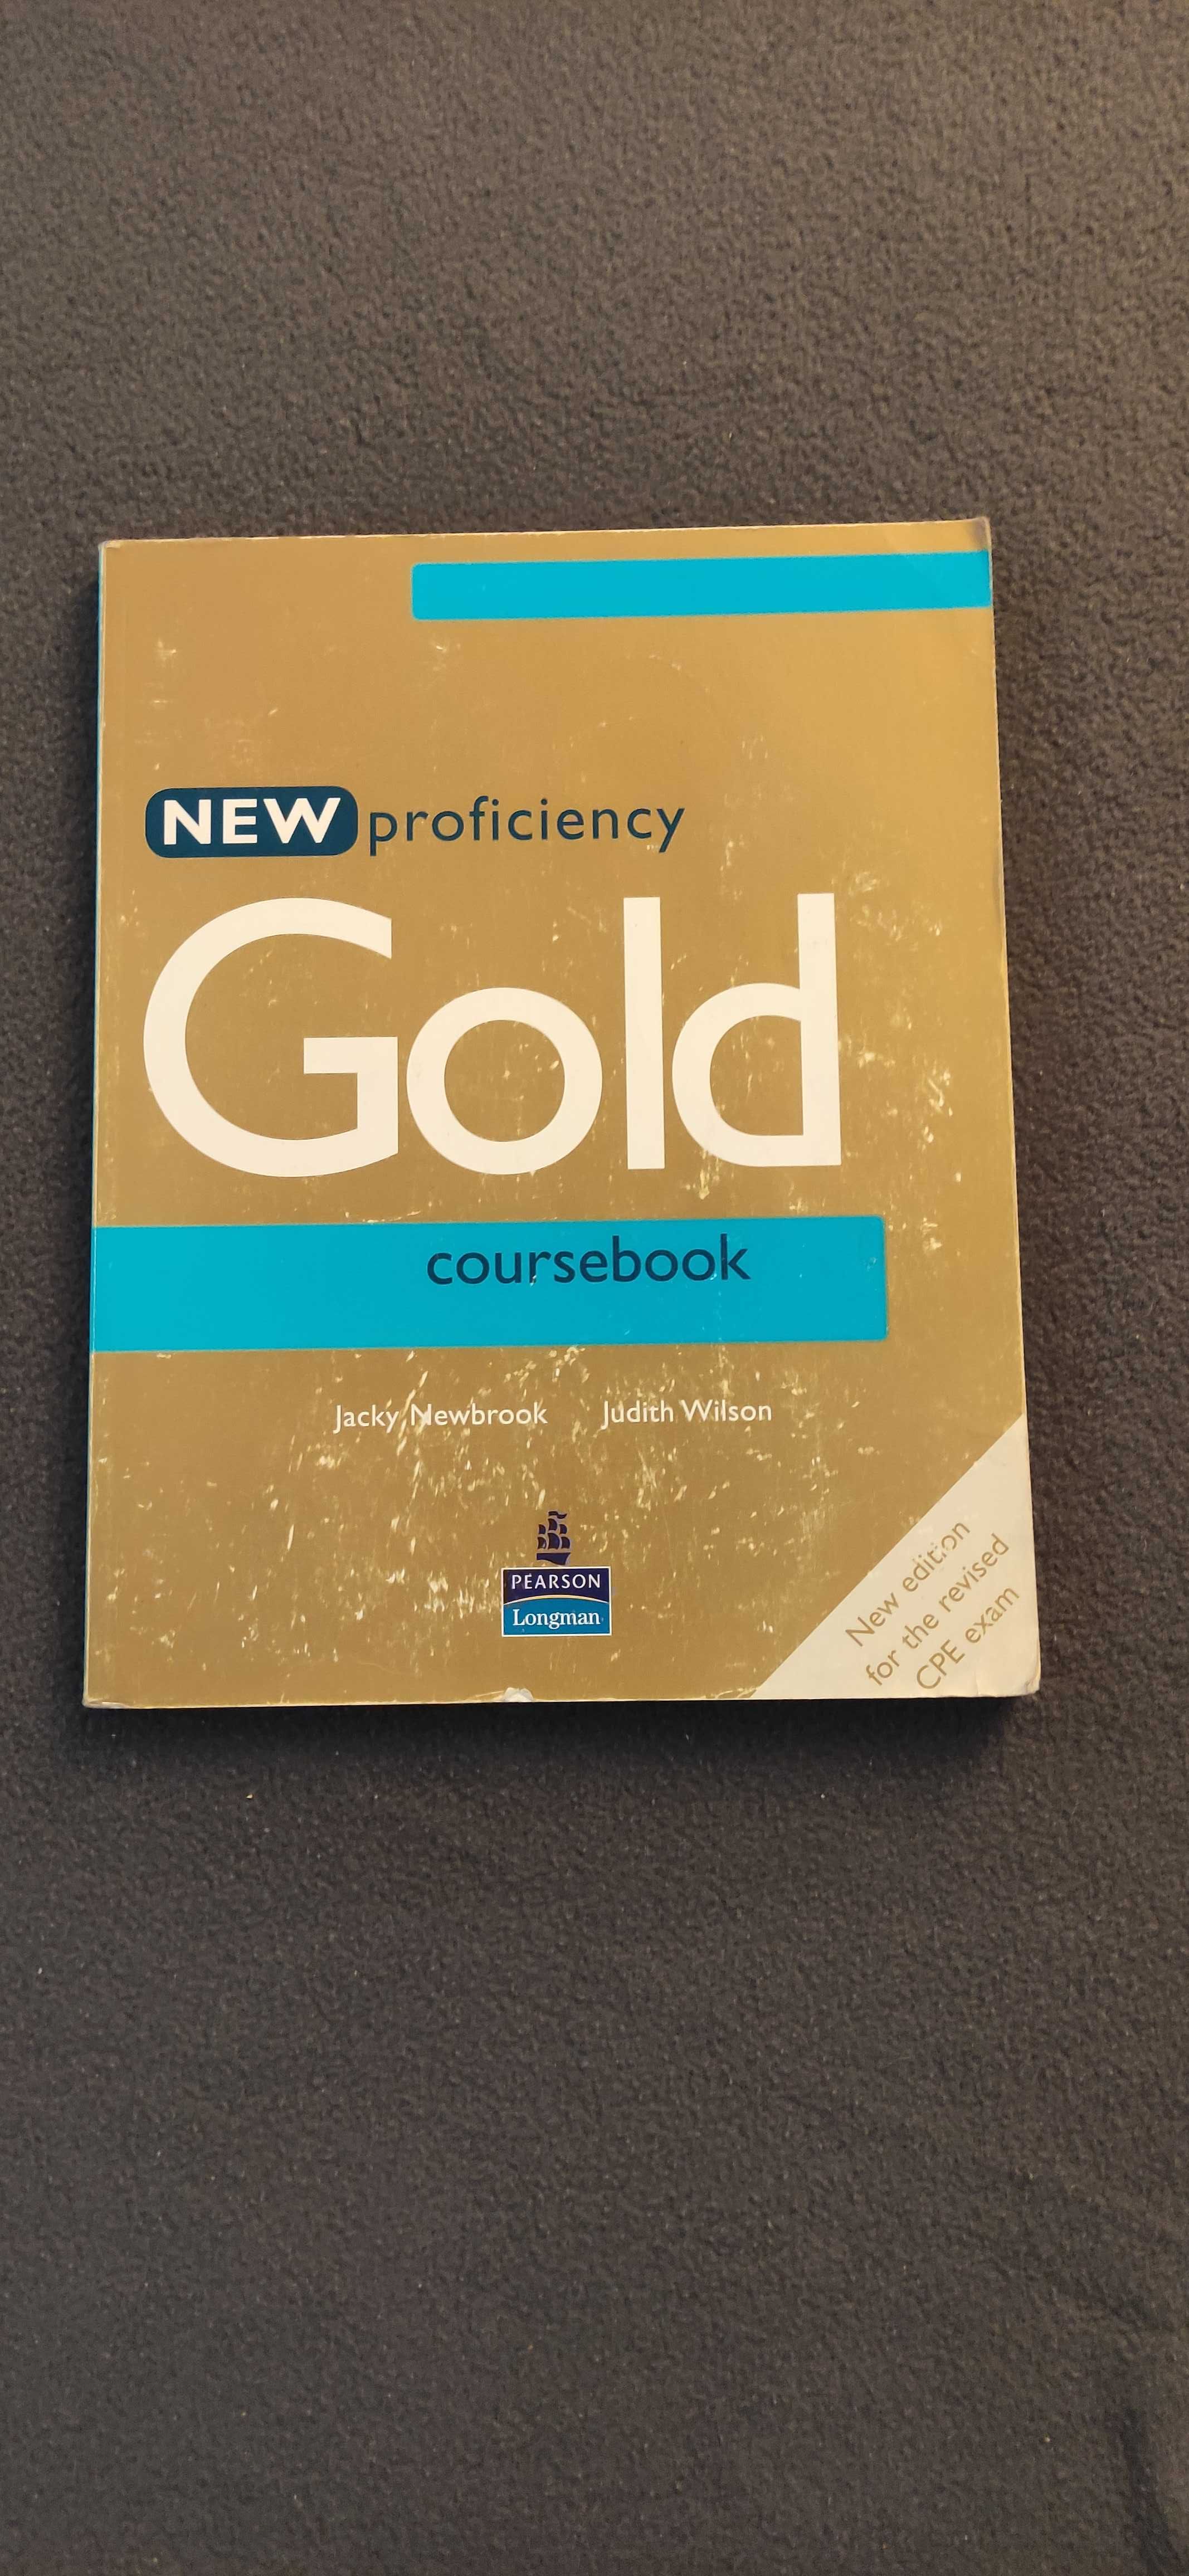 Proficiency Gold New Coursebook Jacky Newbrook, Judith Wilson